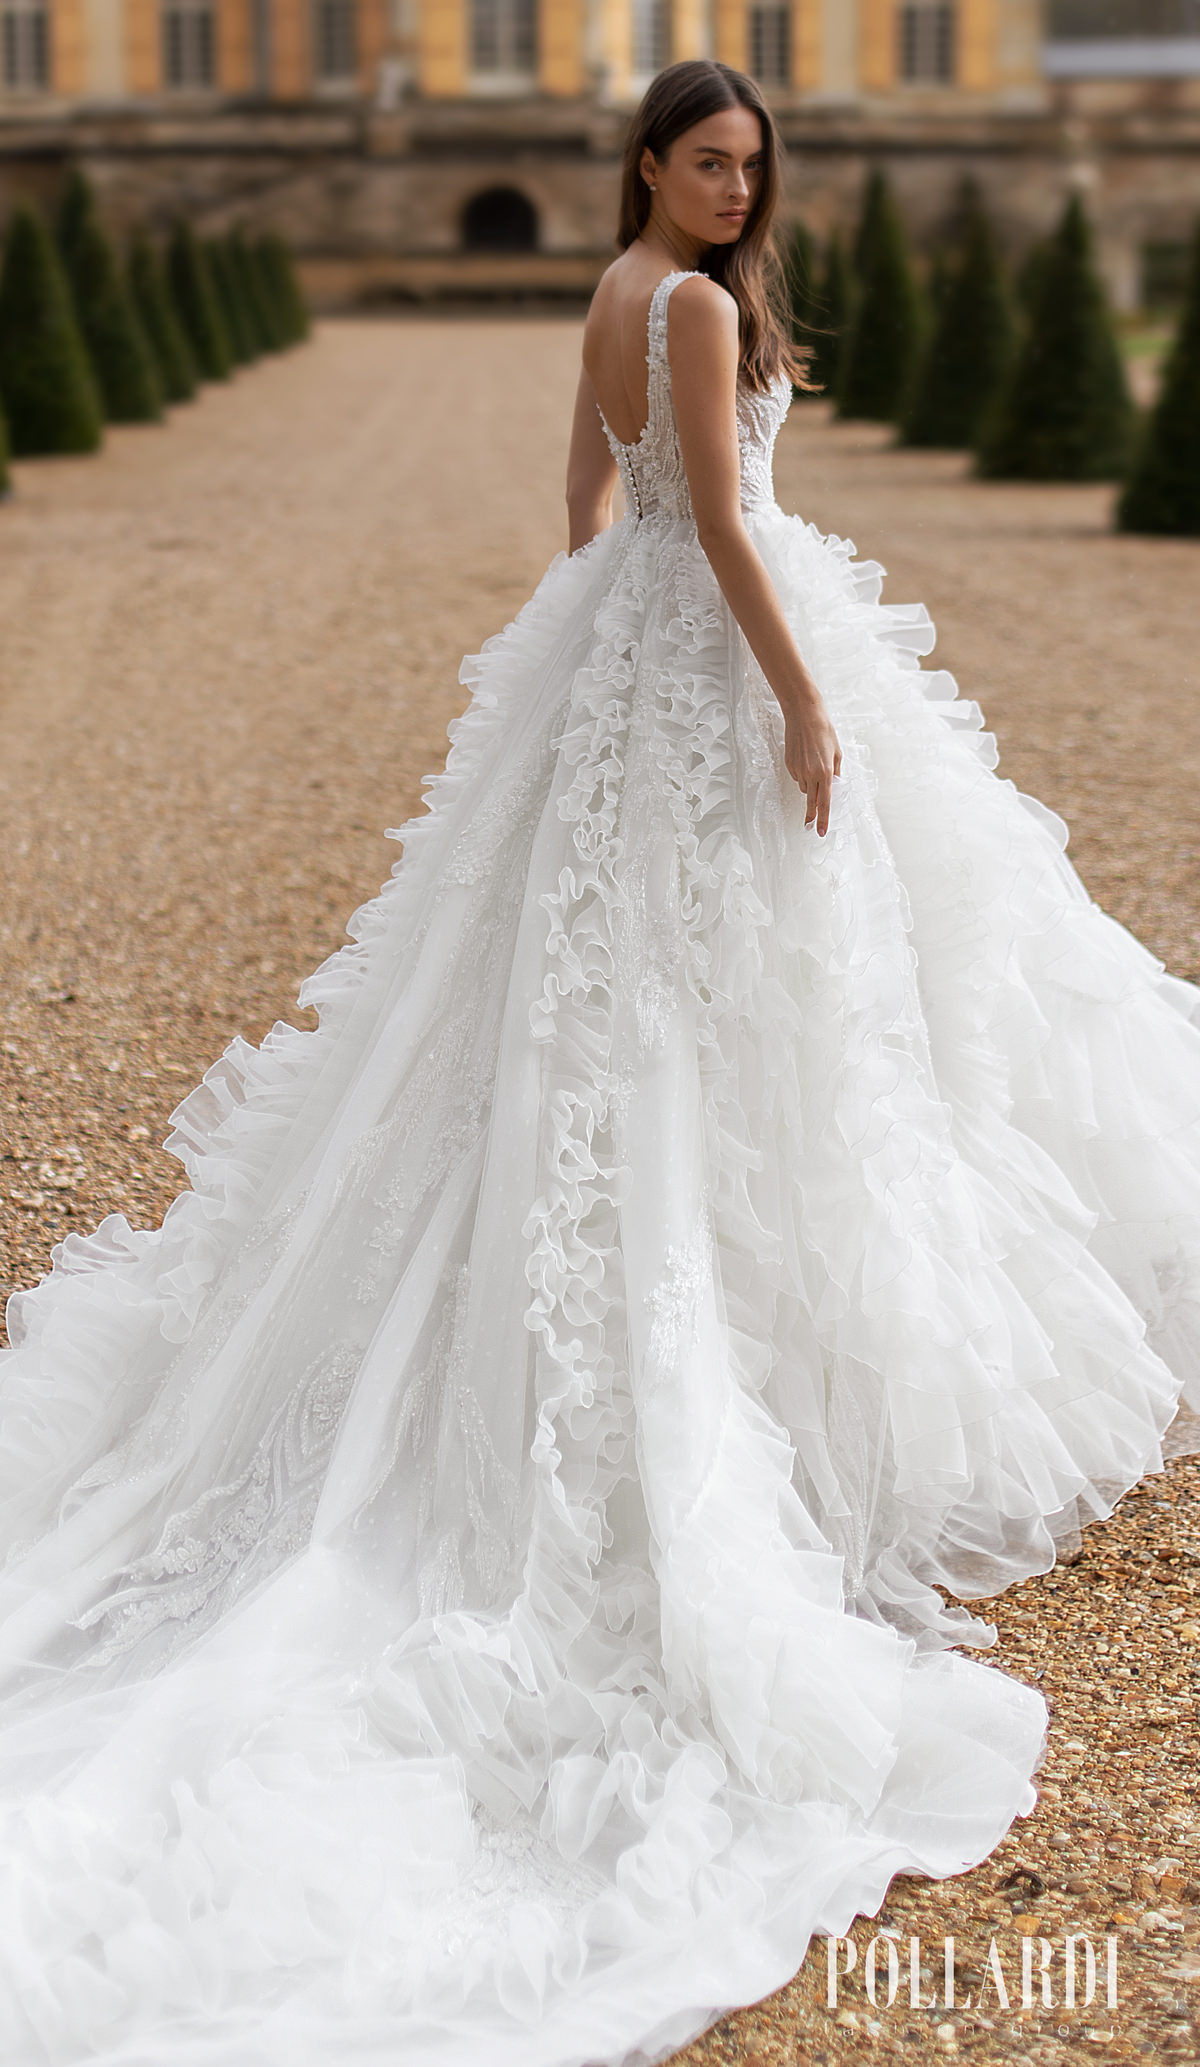 Pollardi Wedding Dresses 2021 Royalty Bridal Collection - 3207_2 Endearment